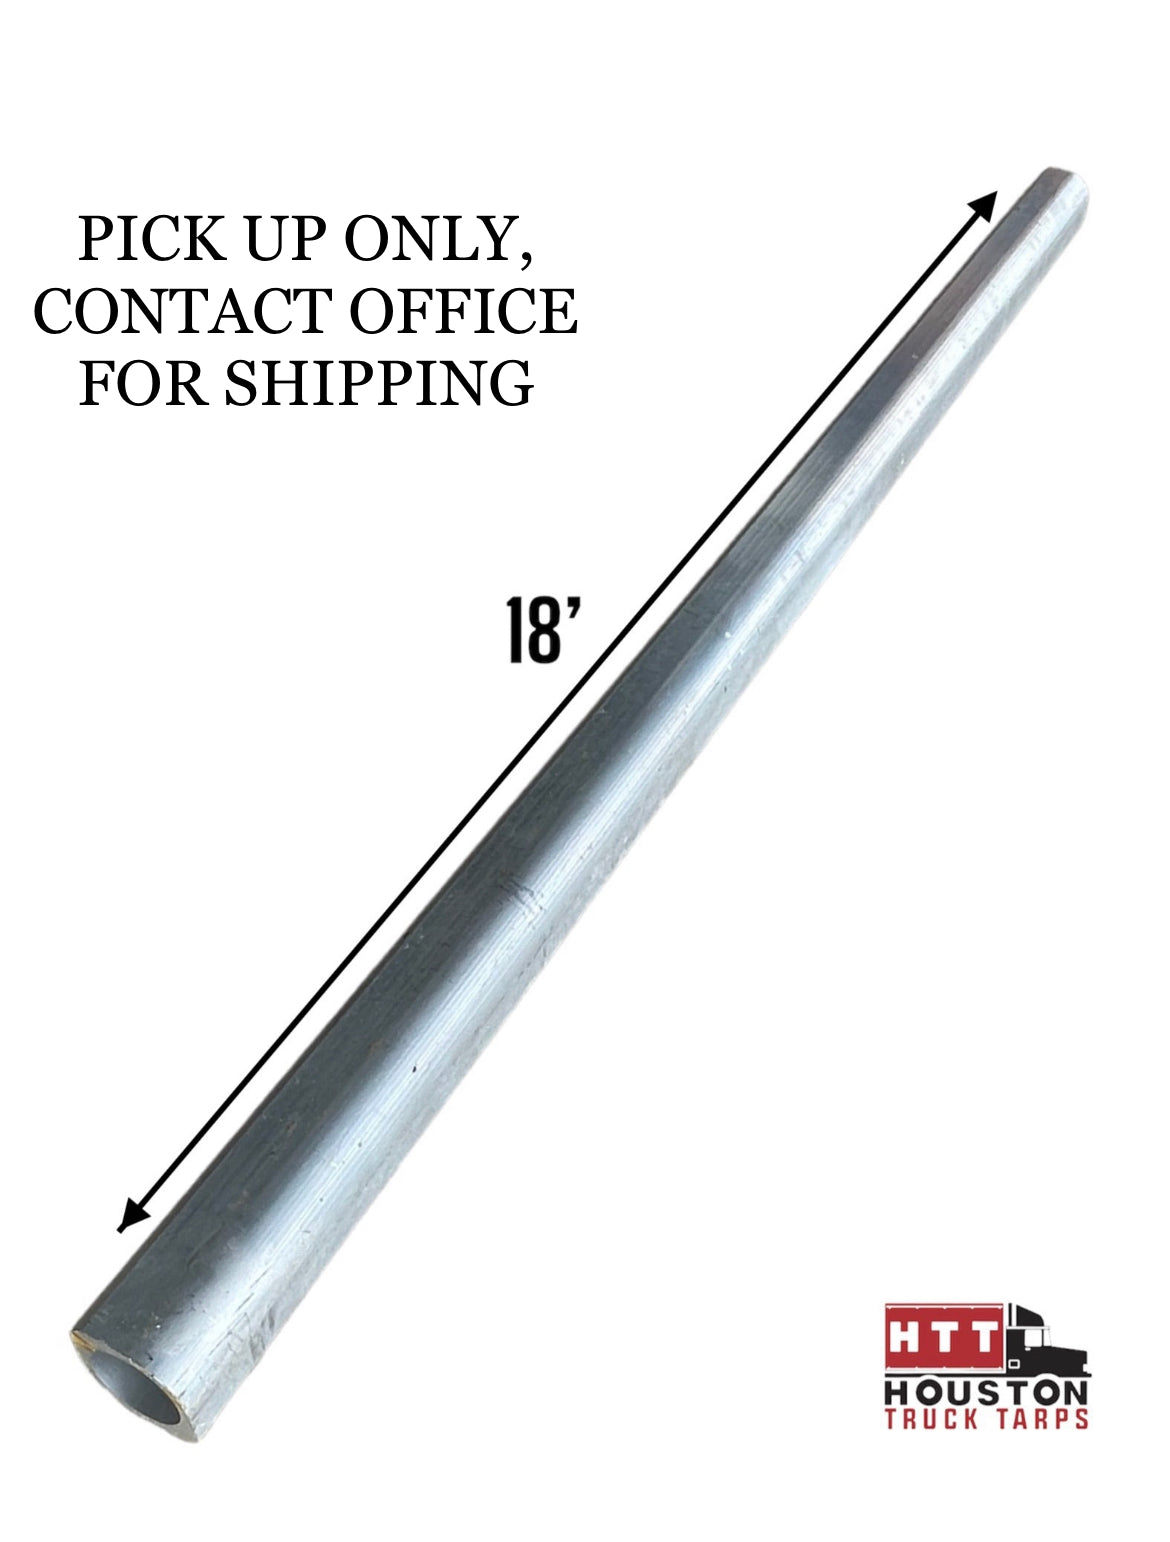 Straight Aluminum Bulleproof Arm 18’ Long